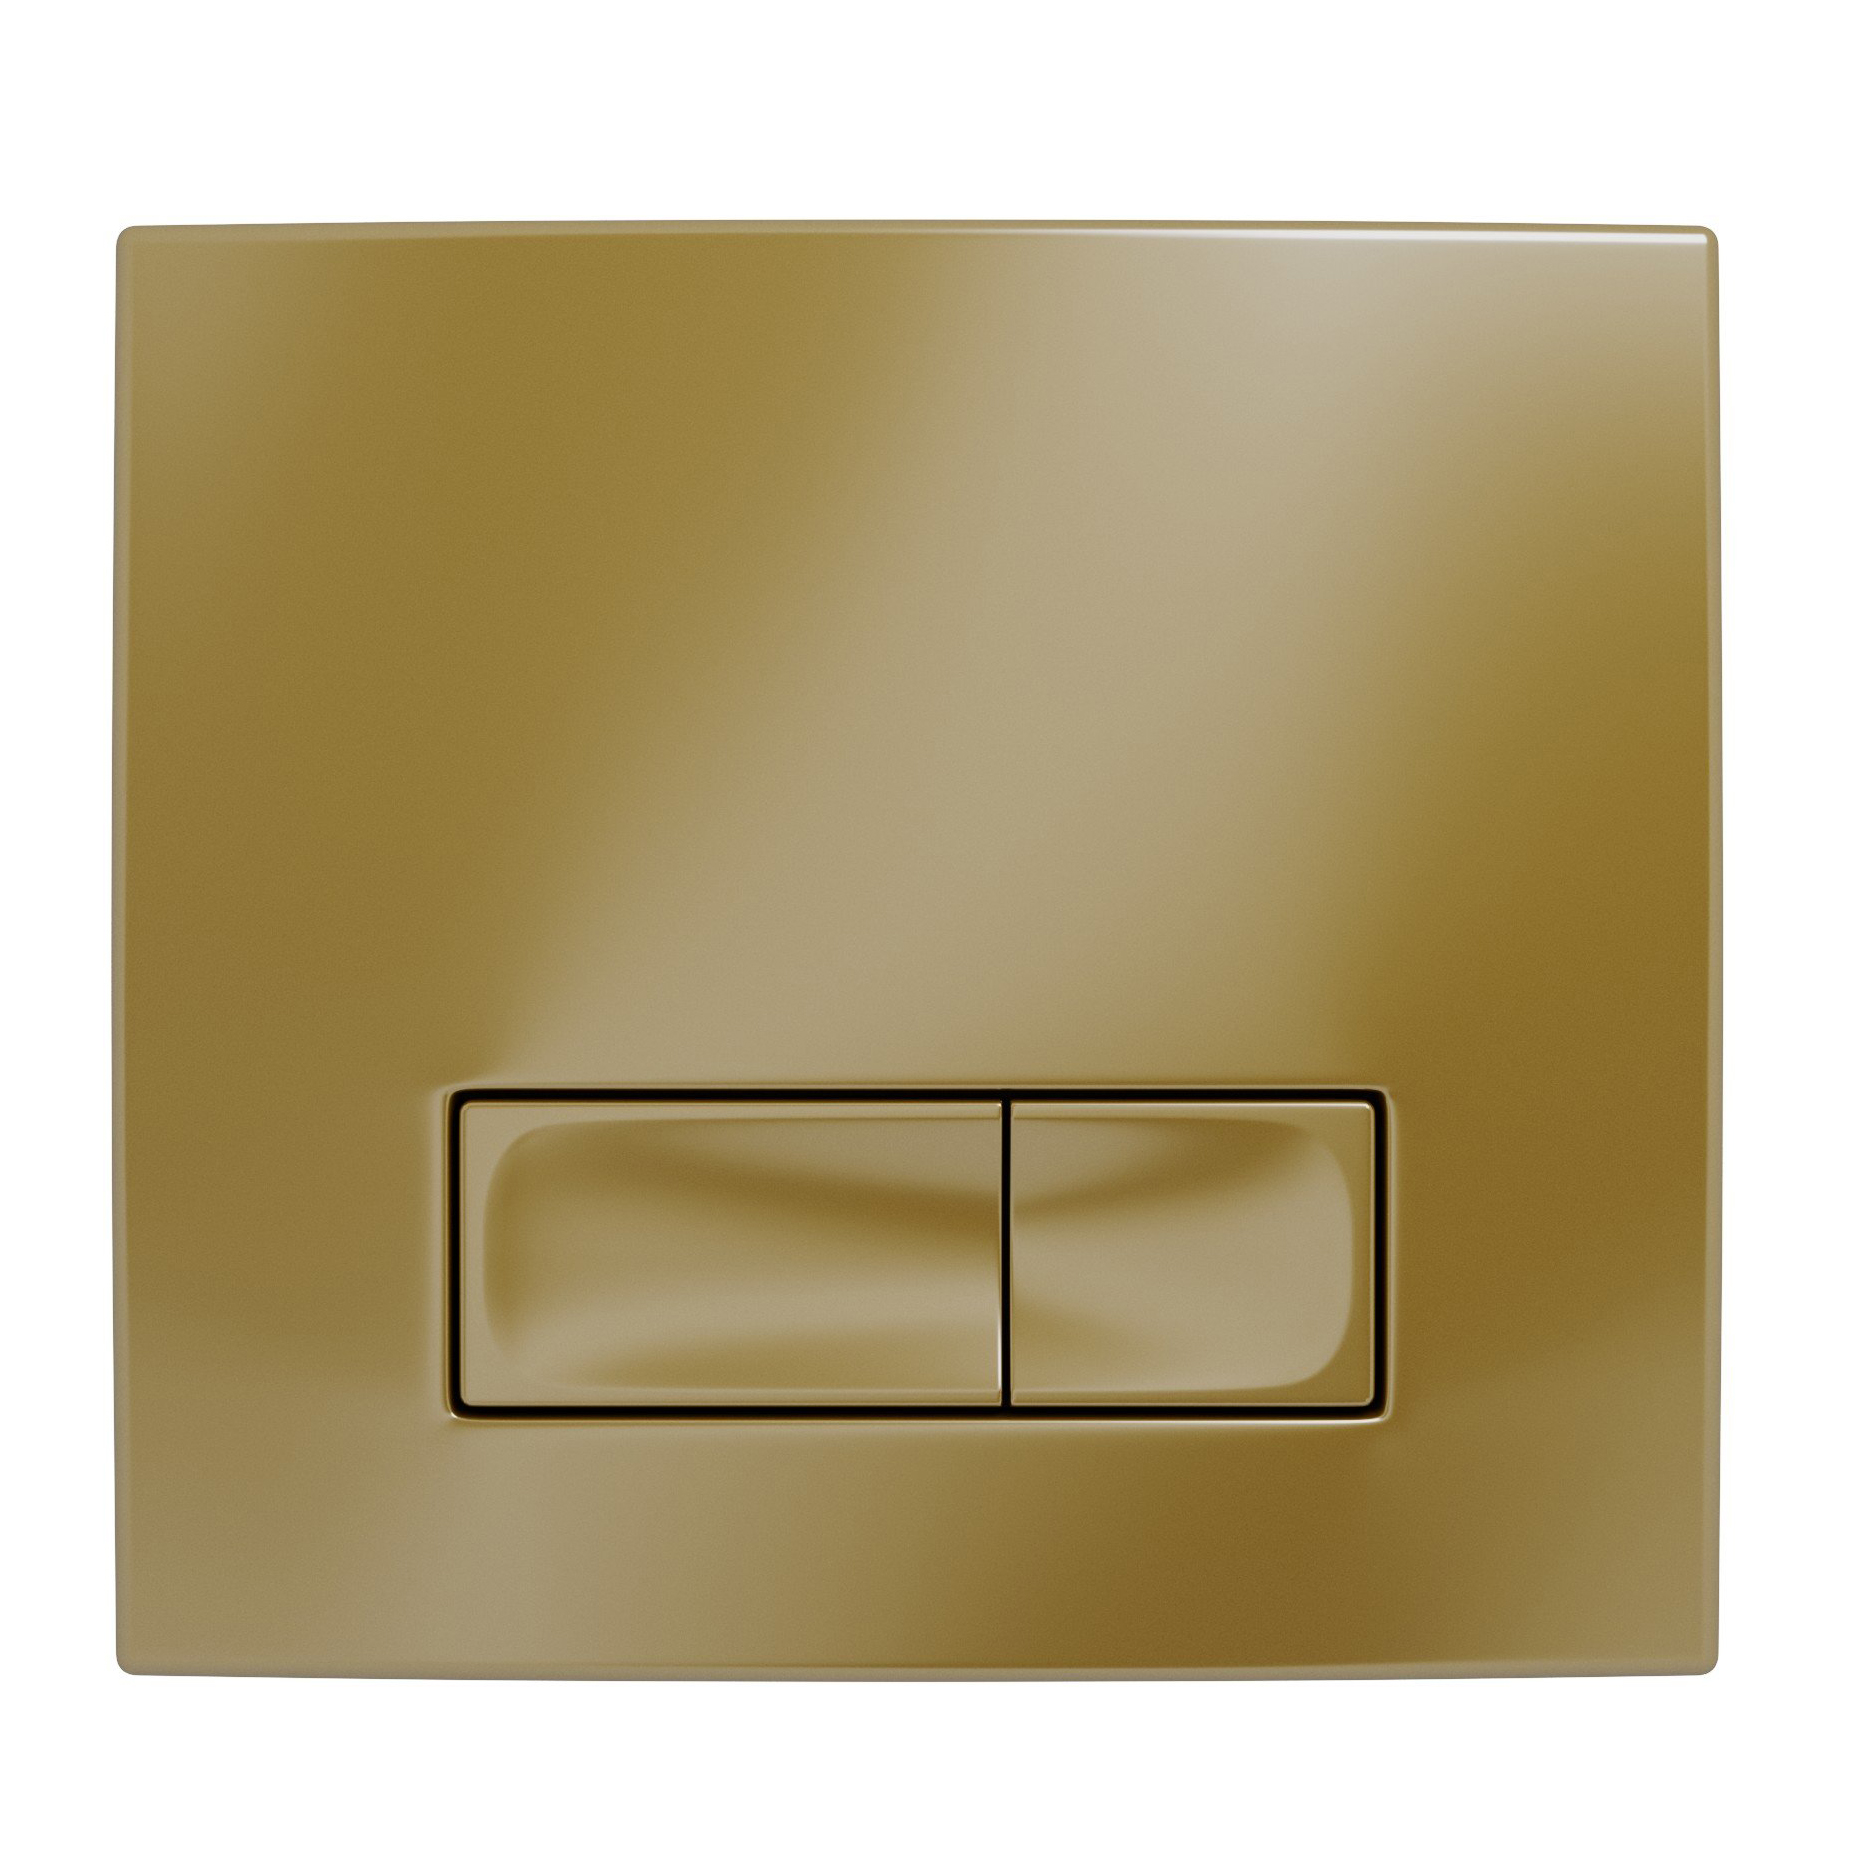 Кнопка для инсталляции Grossman Classic 800.Т1.04.310.310 золото кнопка для инсталляции shouder shd 00011933 золото